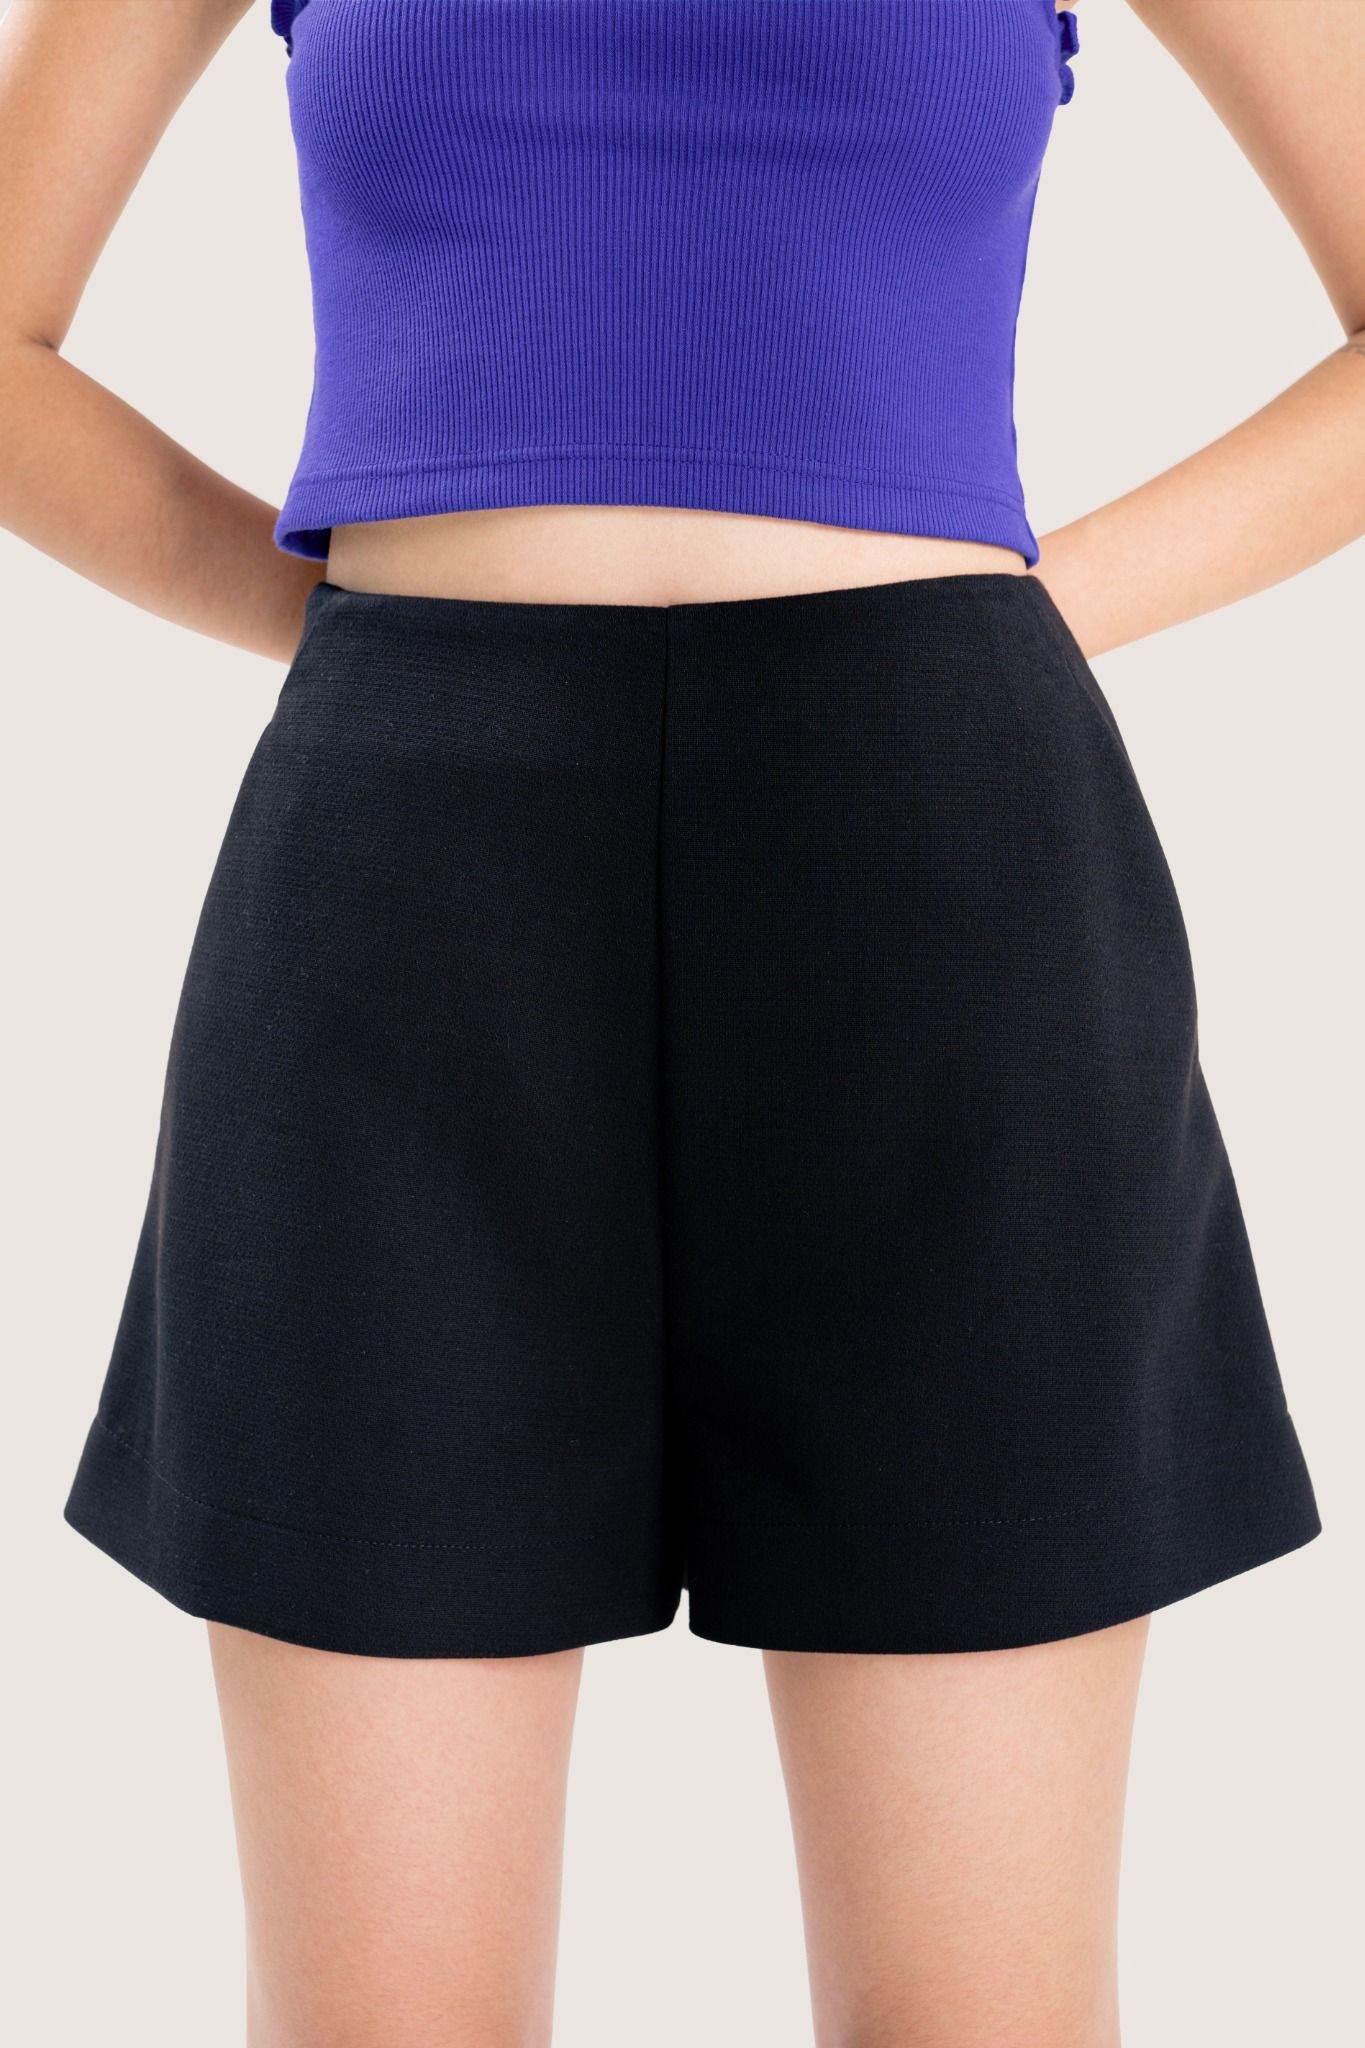  Black A-Line Shorts 